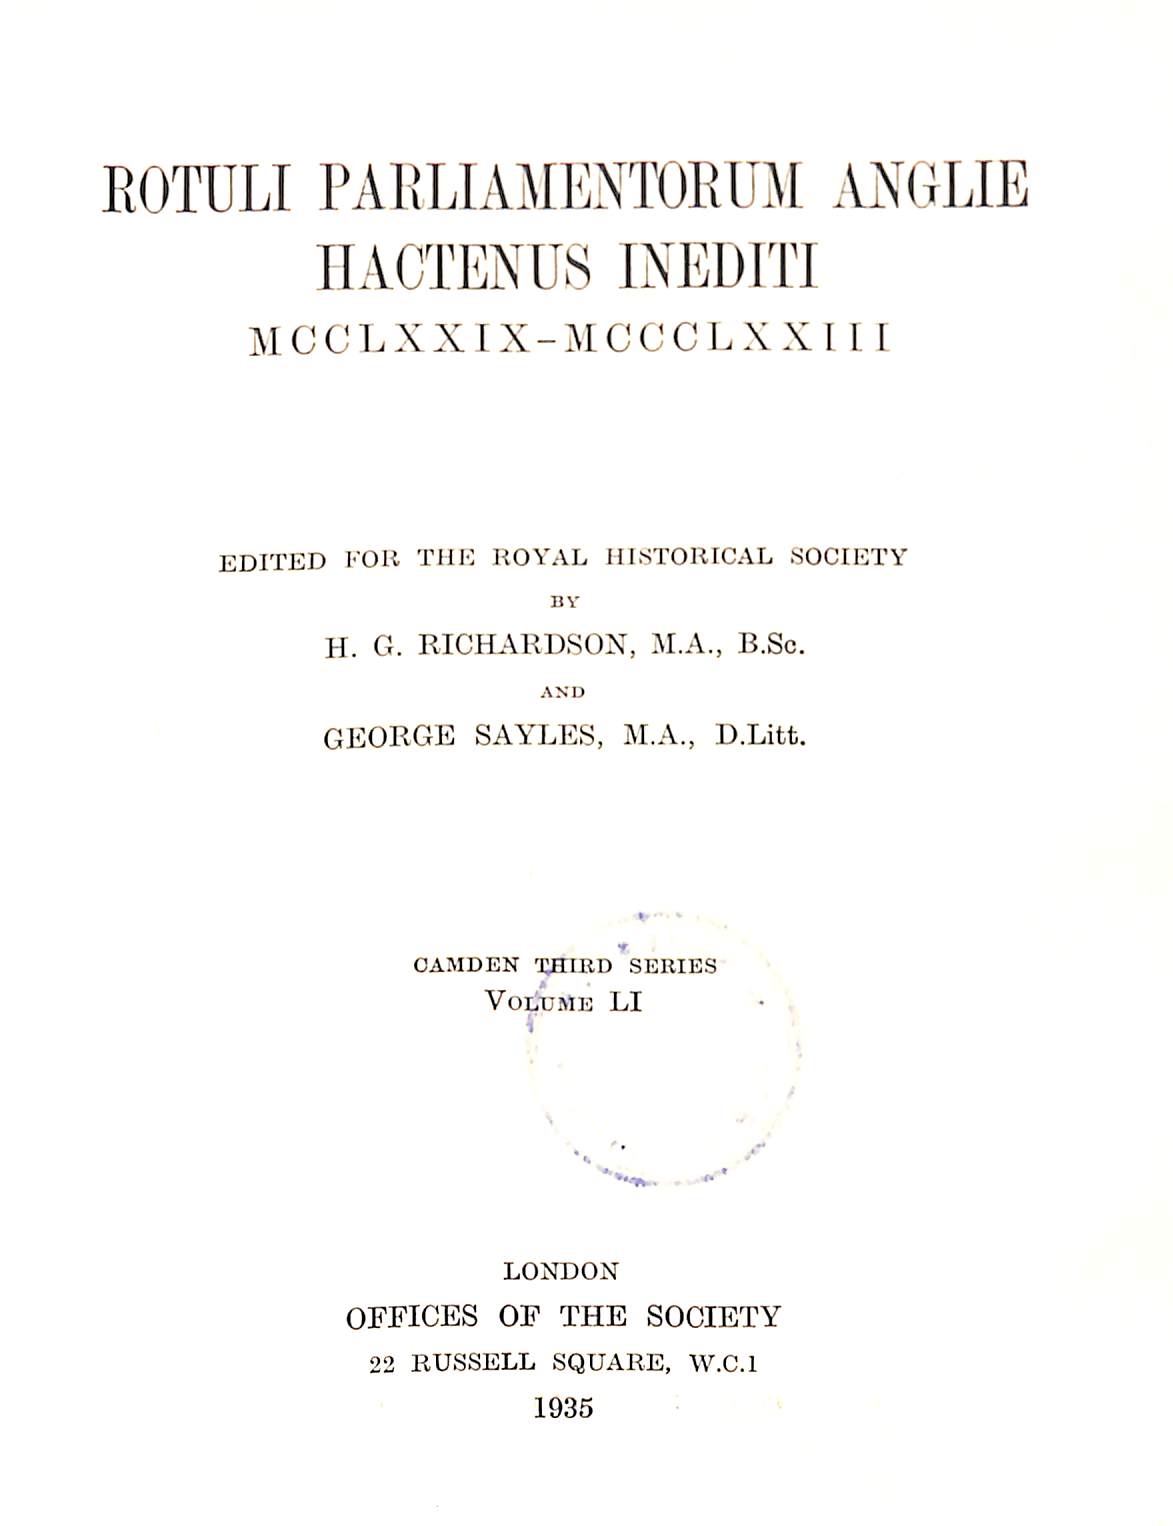 ROTULI PARLIAMENTORUM ANGLIE HACTENUS INEDITI; MCCLXXIX-MCCCLXXIII. - Richardson, H.G. and George Sayles. (Editors).